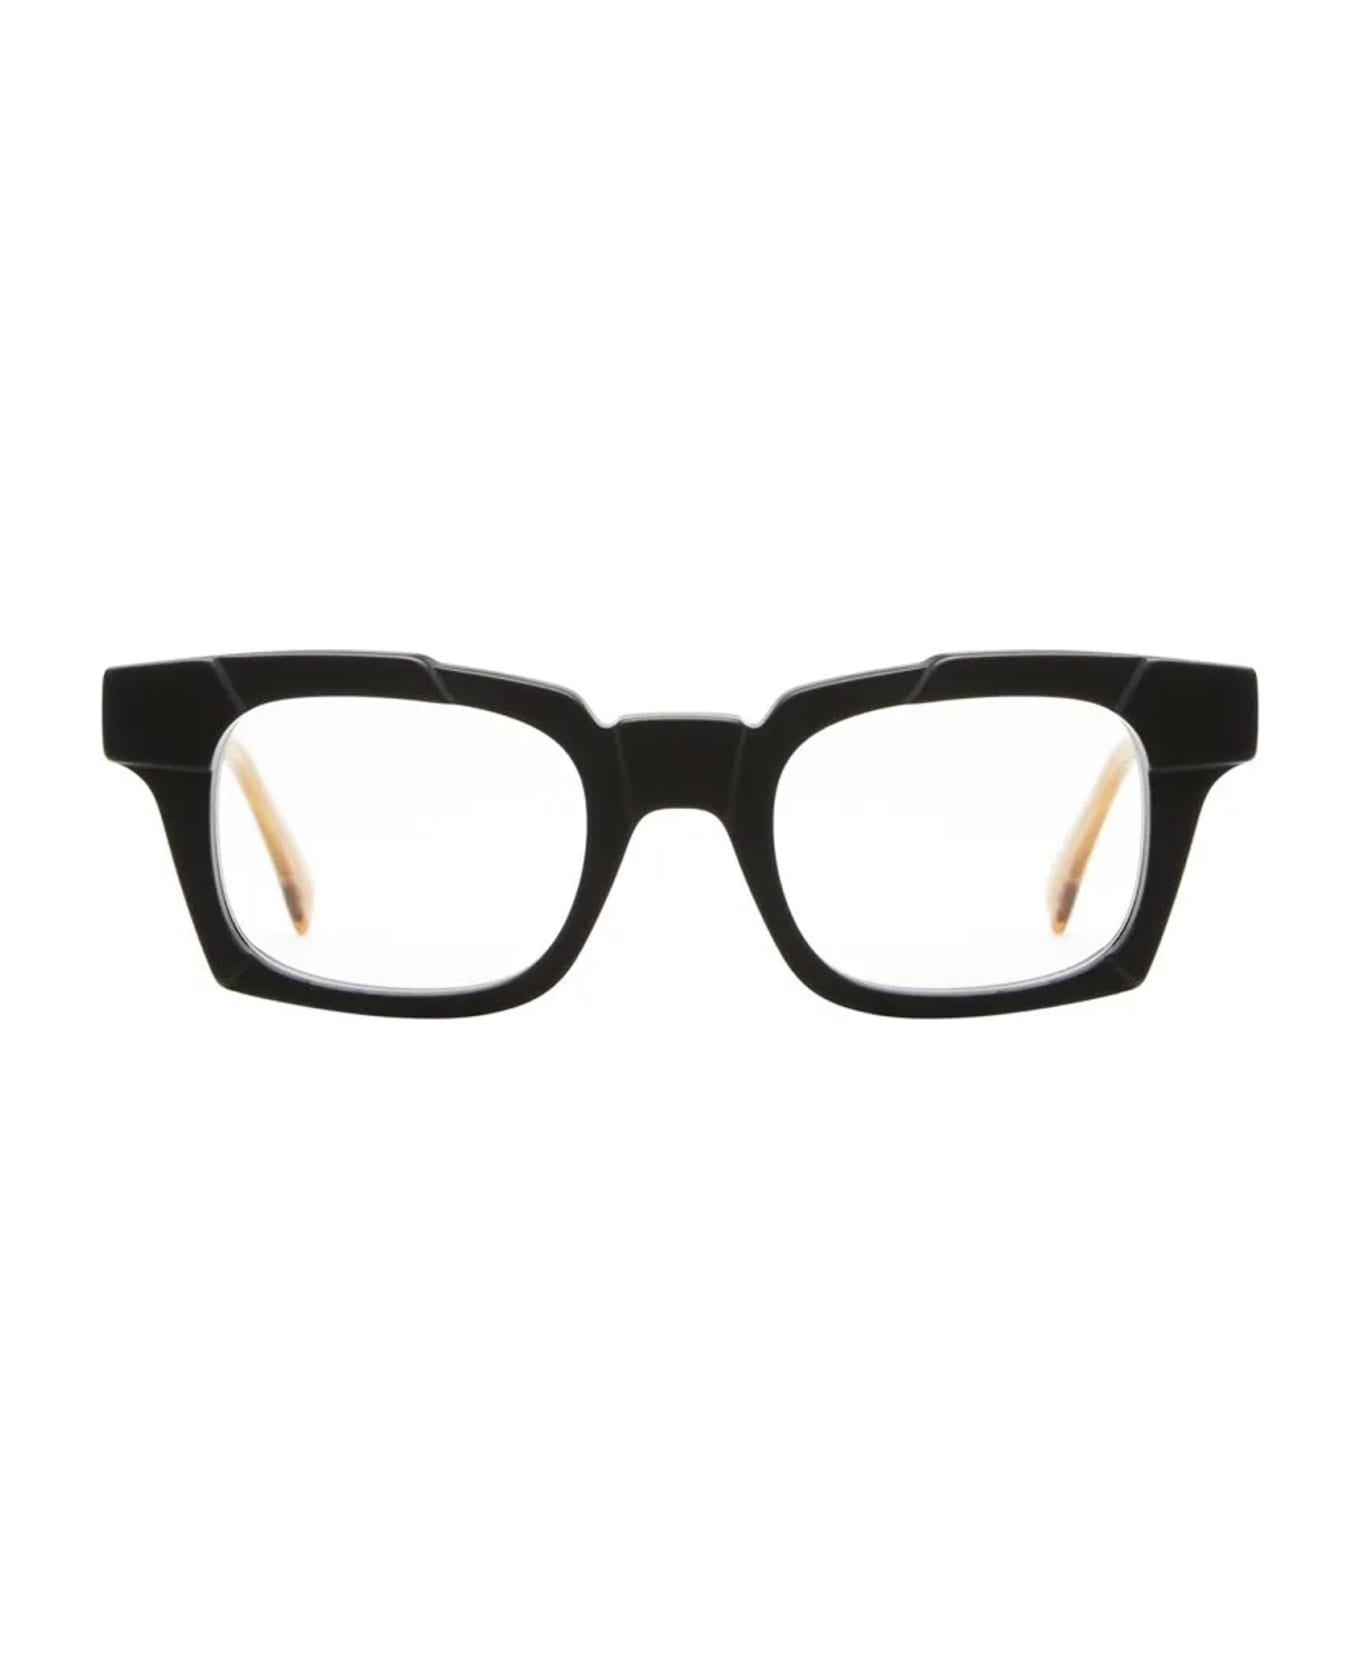 Kuboraum Mask S3 - Black Matt Glasses - matte black/transparentcamel アイウェア